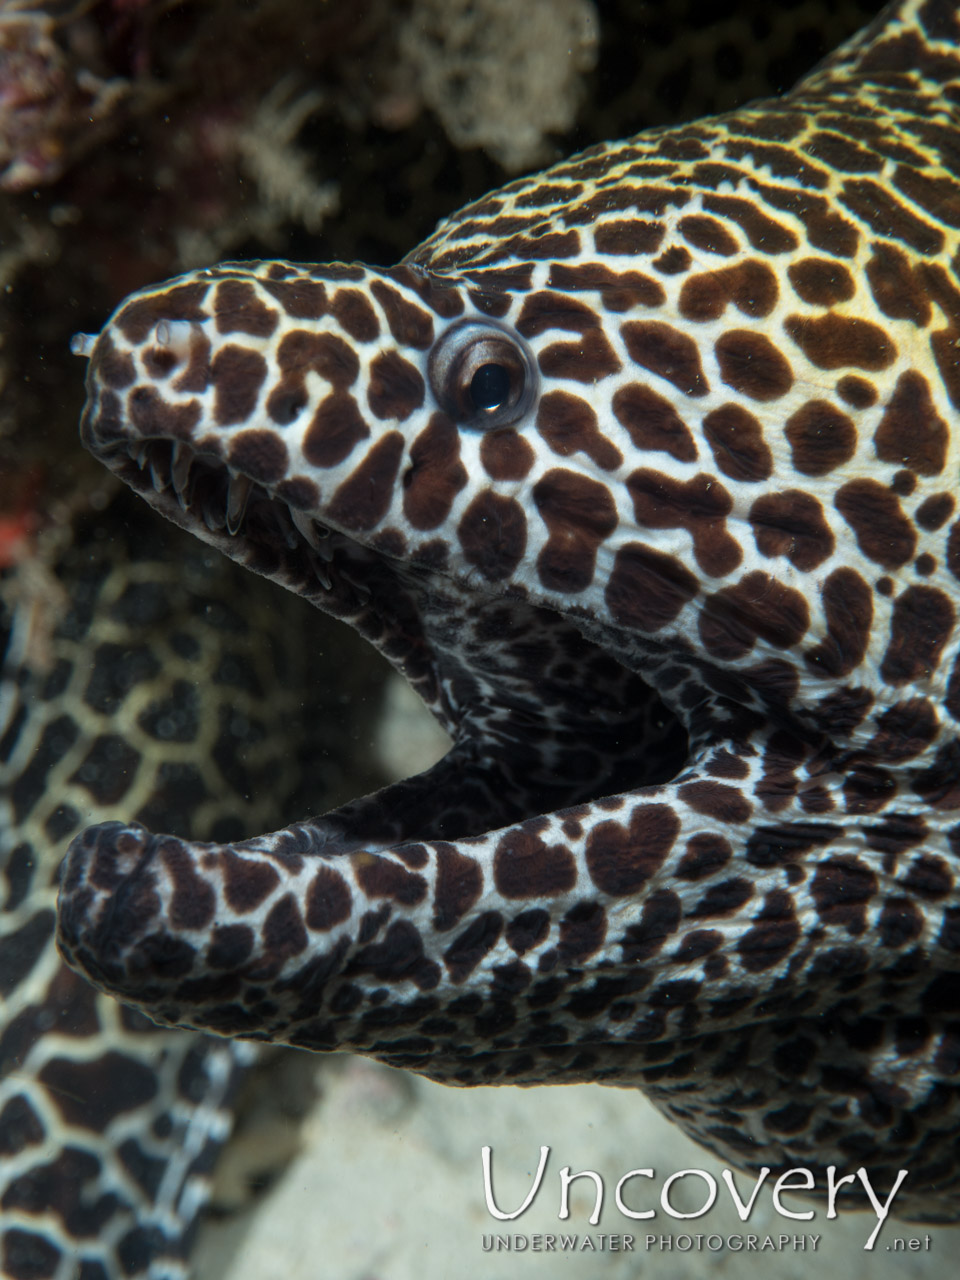 Honeycomb Moray (gymnothorax Favagineus), photo taken in Maldives, Male Atoll, North Male Atoll, Fish Tank